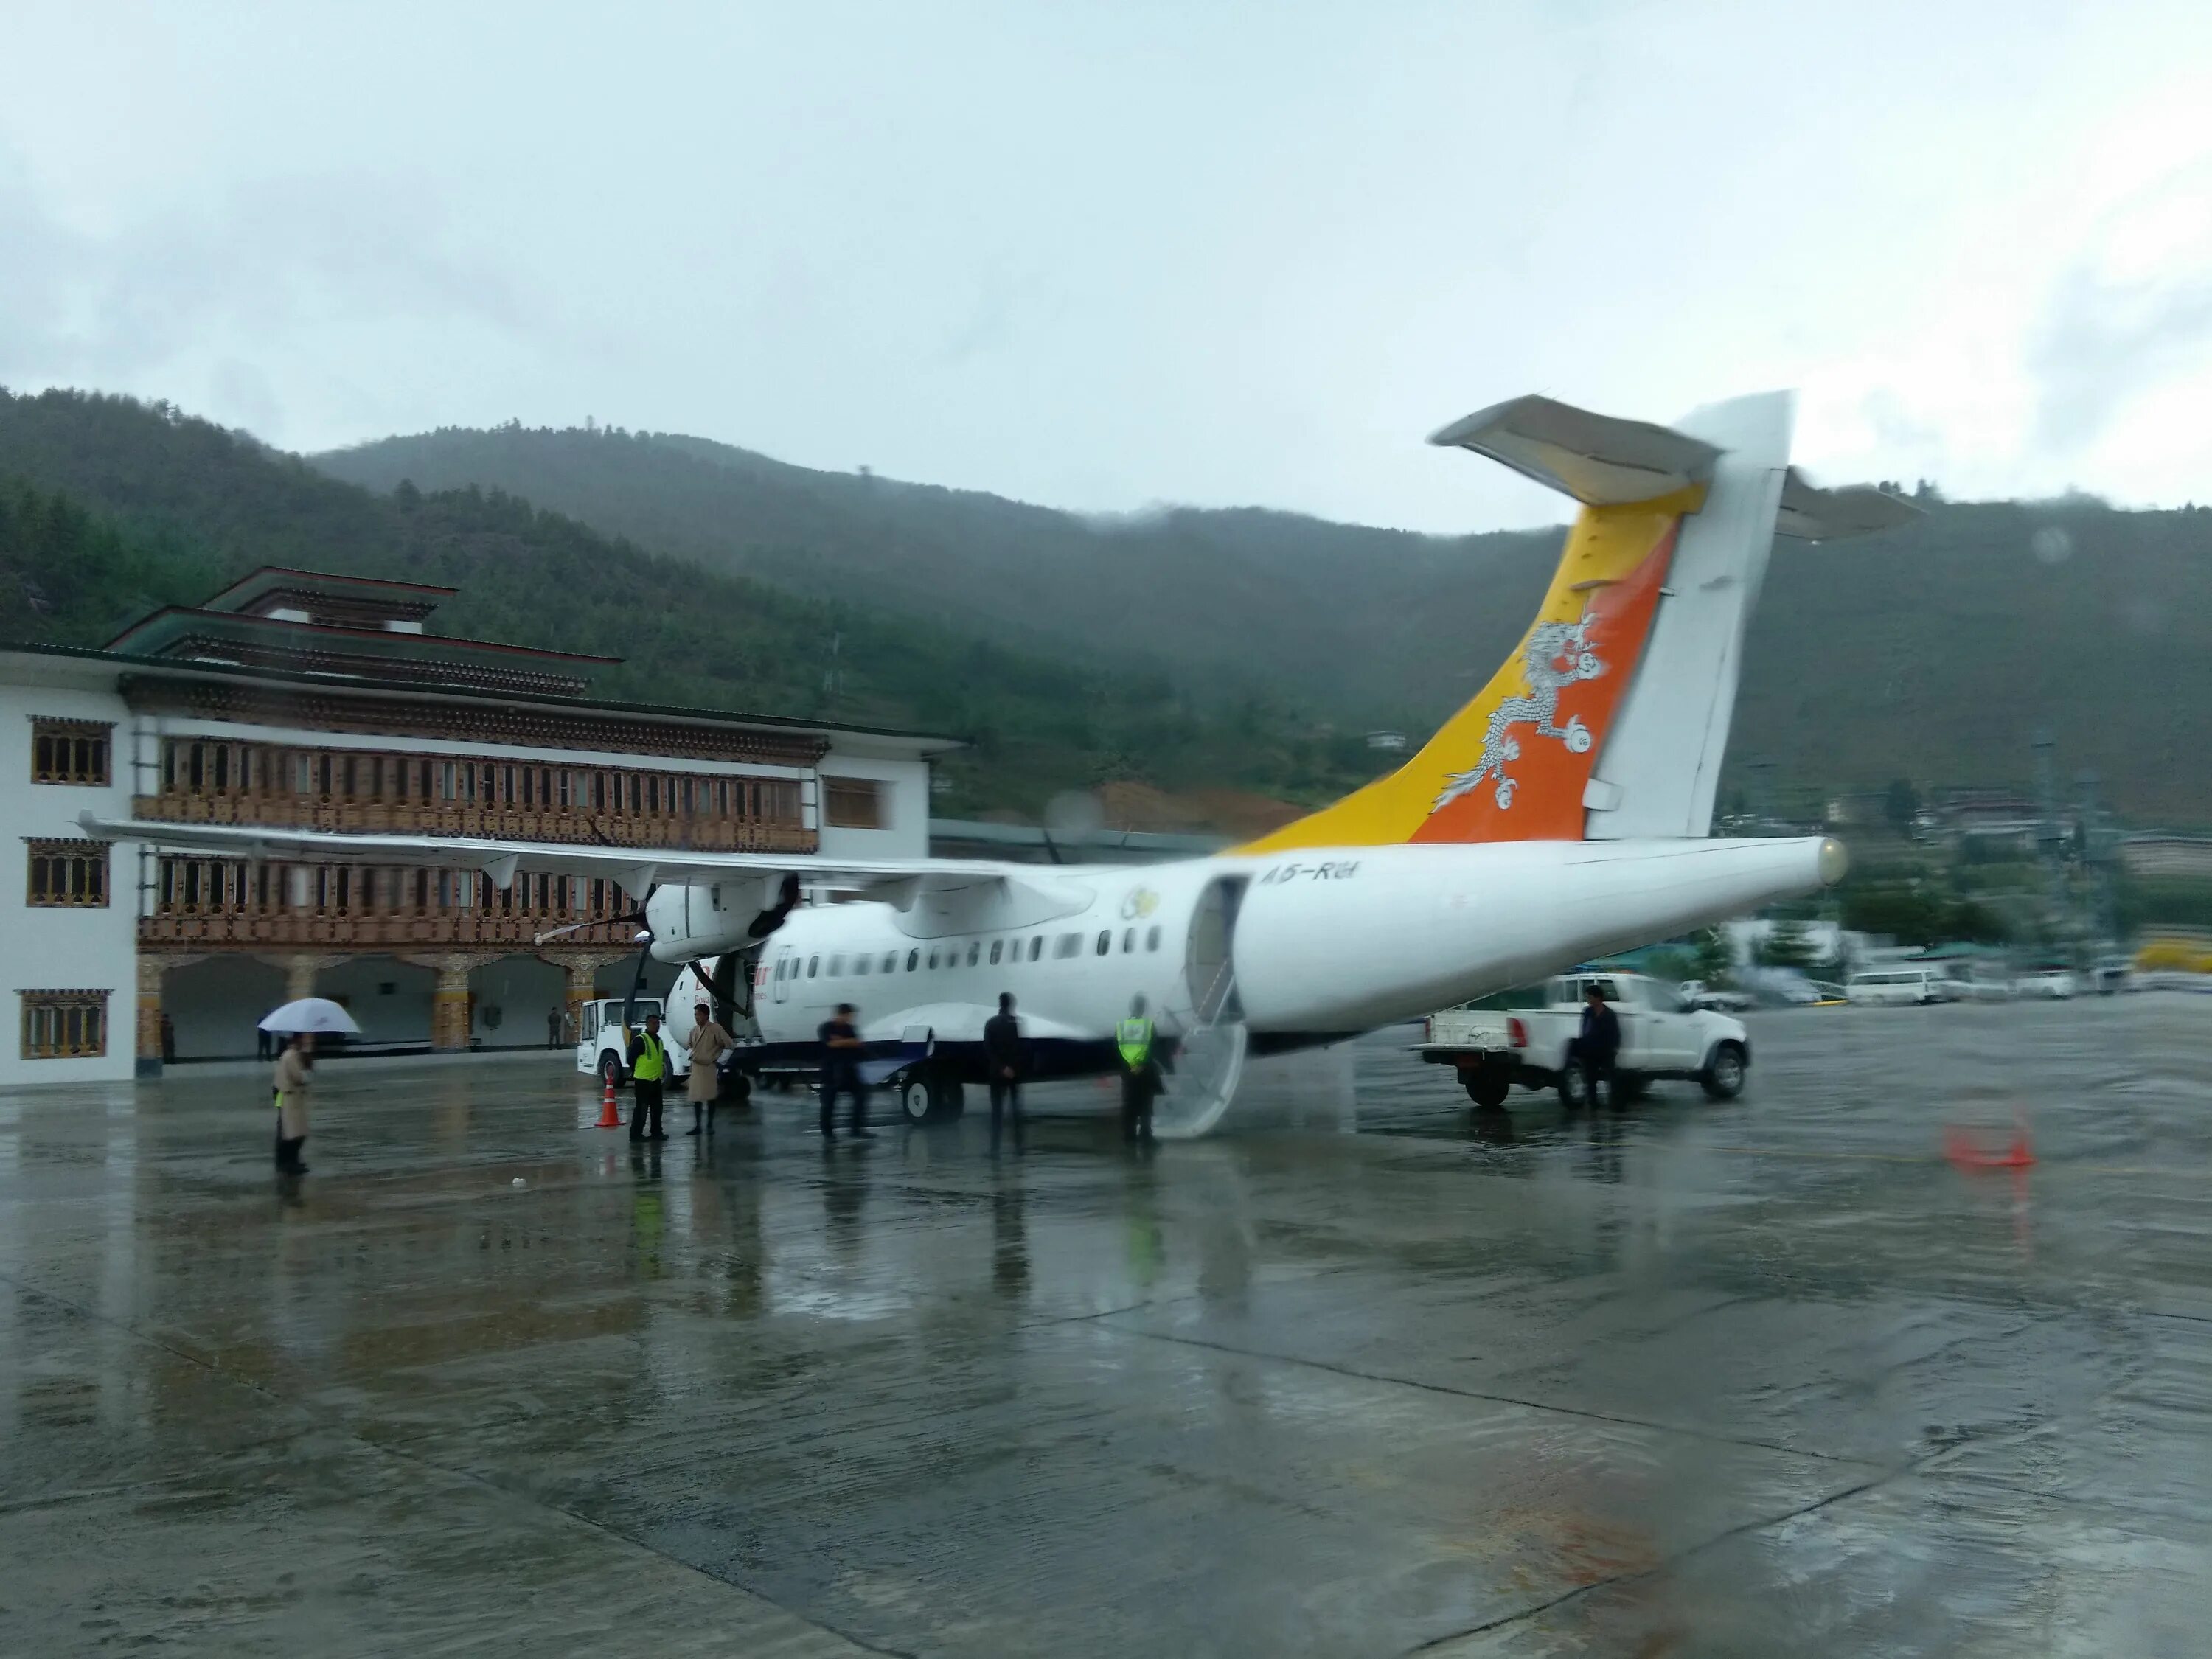 Бутан Тхимпху аэропорт. Аэропорт паро в бутане. Аэропорт паро в королевстве бутан. Аэропорт паро в бутане, Гималаи. Аэропорт бутана